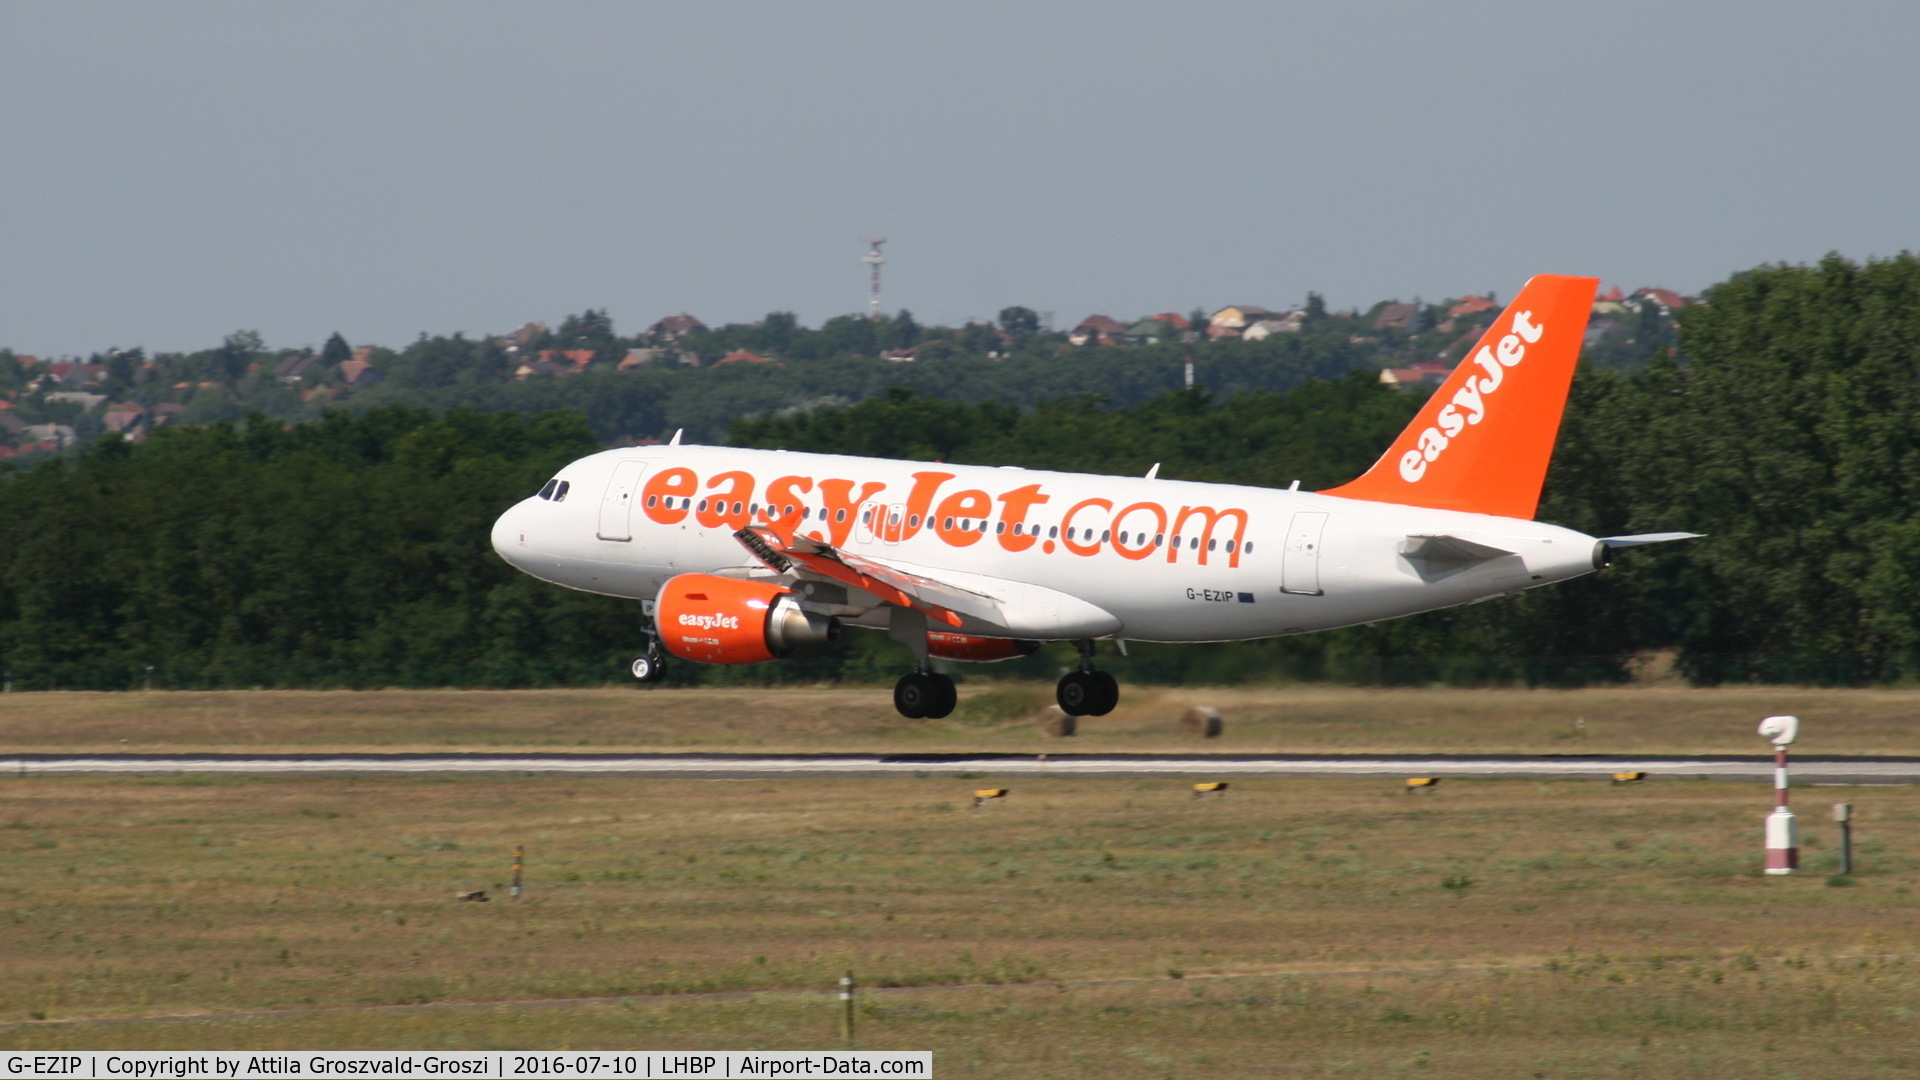 G-EZIP, 2005 Airbus A319-111 C/N 2514, Budapest Airport, Hungary - Landing